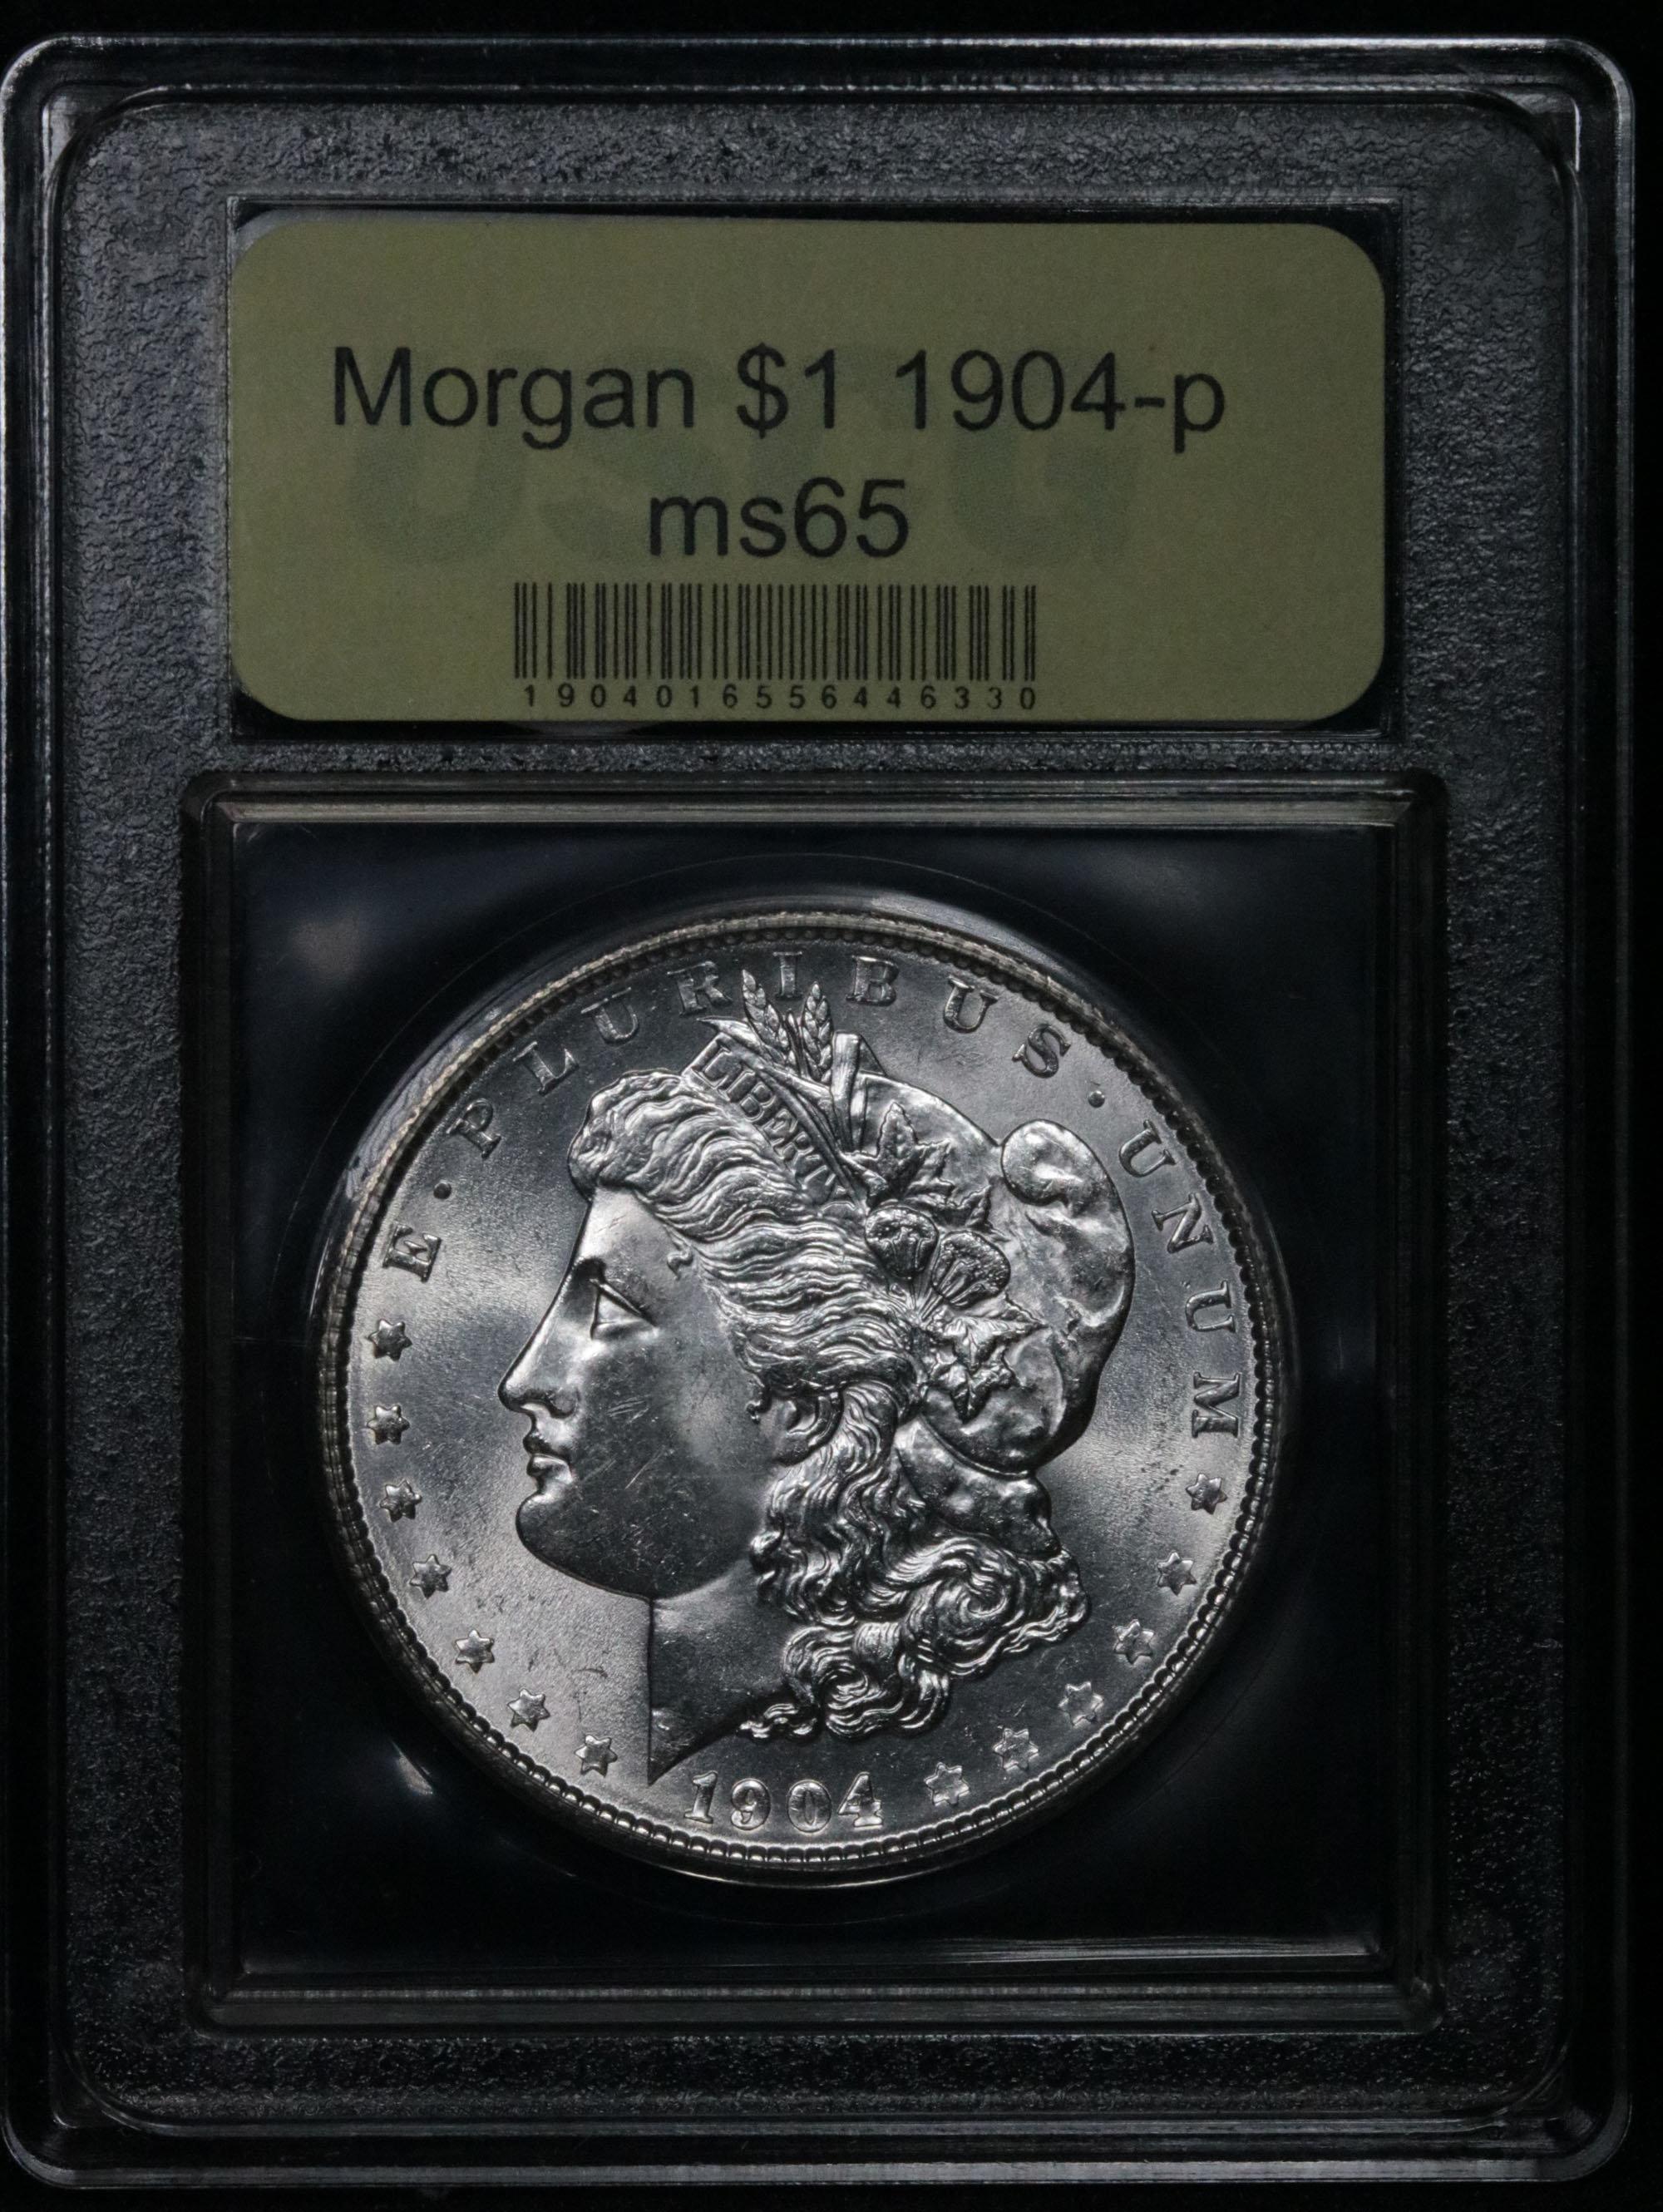 ***Auction Highlight*** 1904-p Morgan Dollar $1 Graded GEM Unc by USCG (fc)